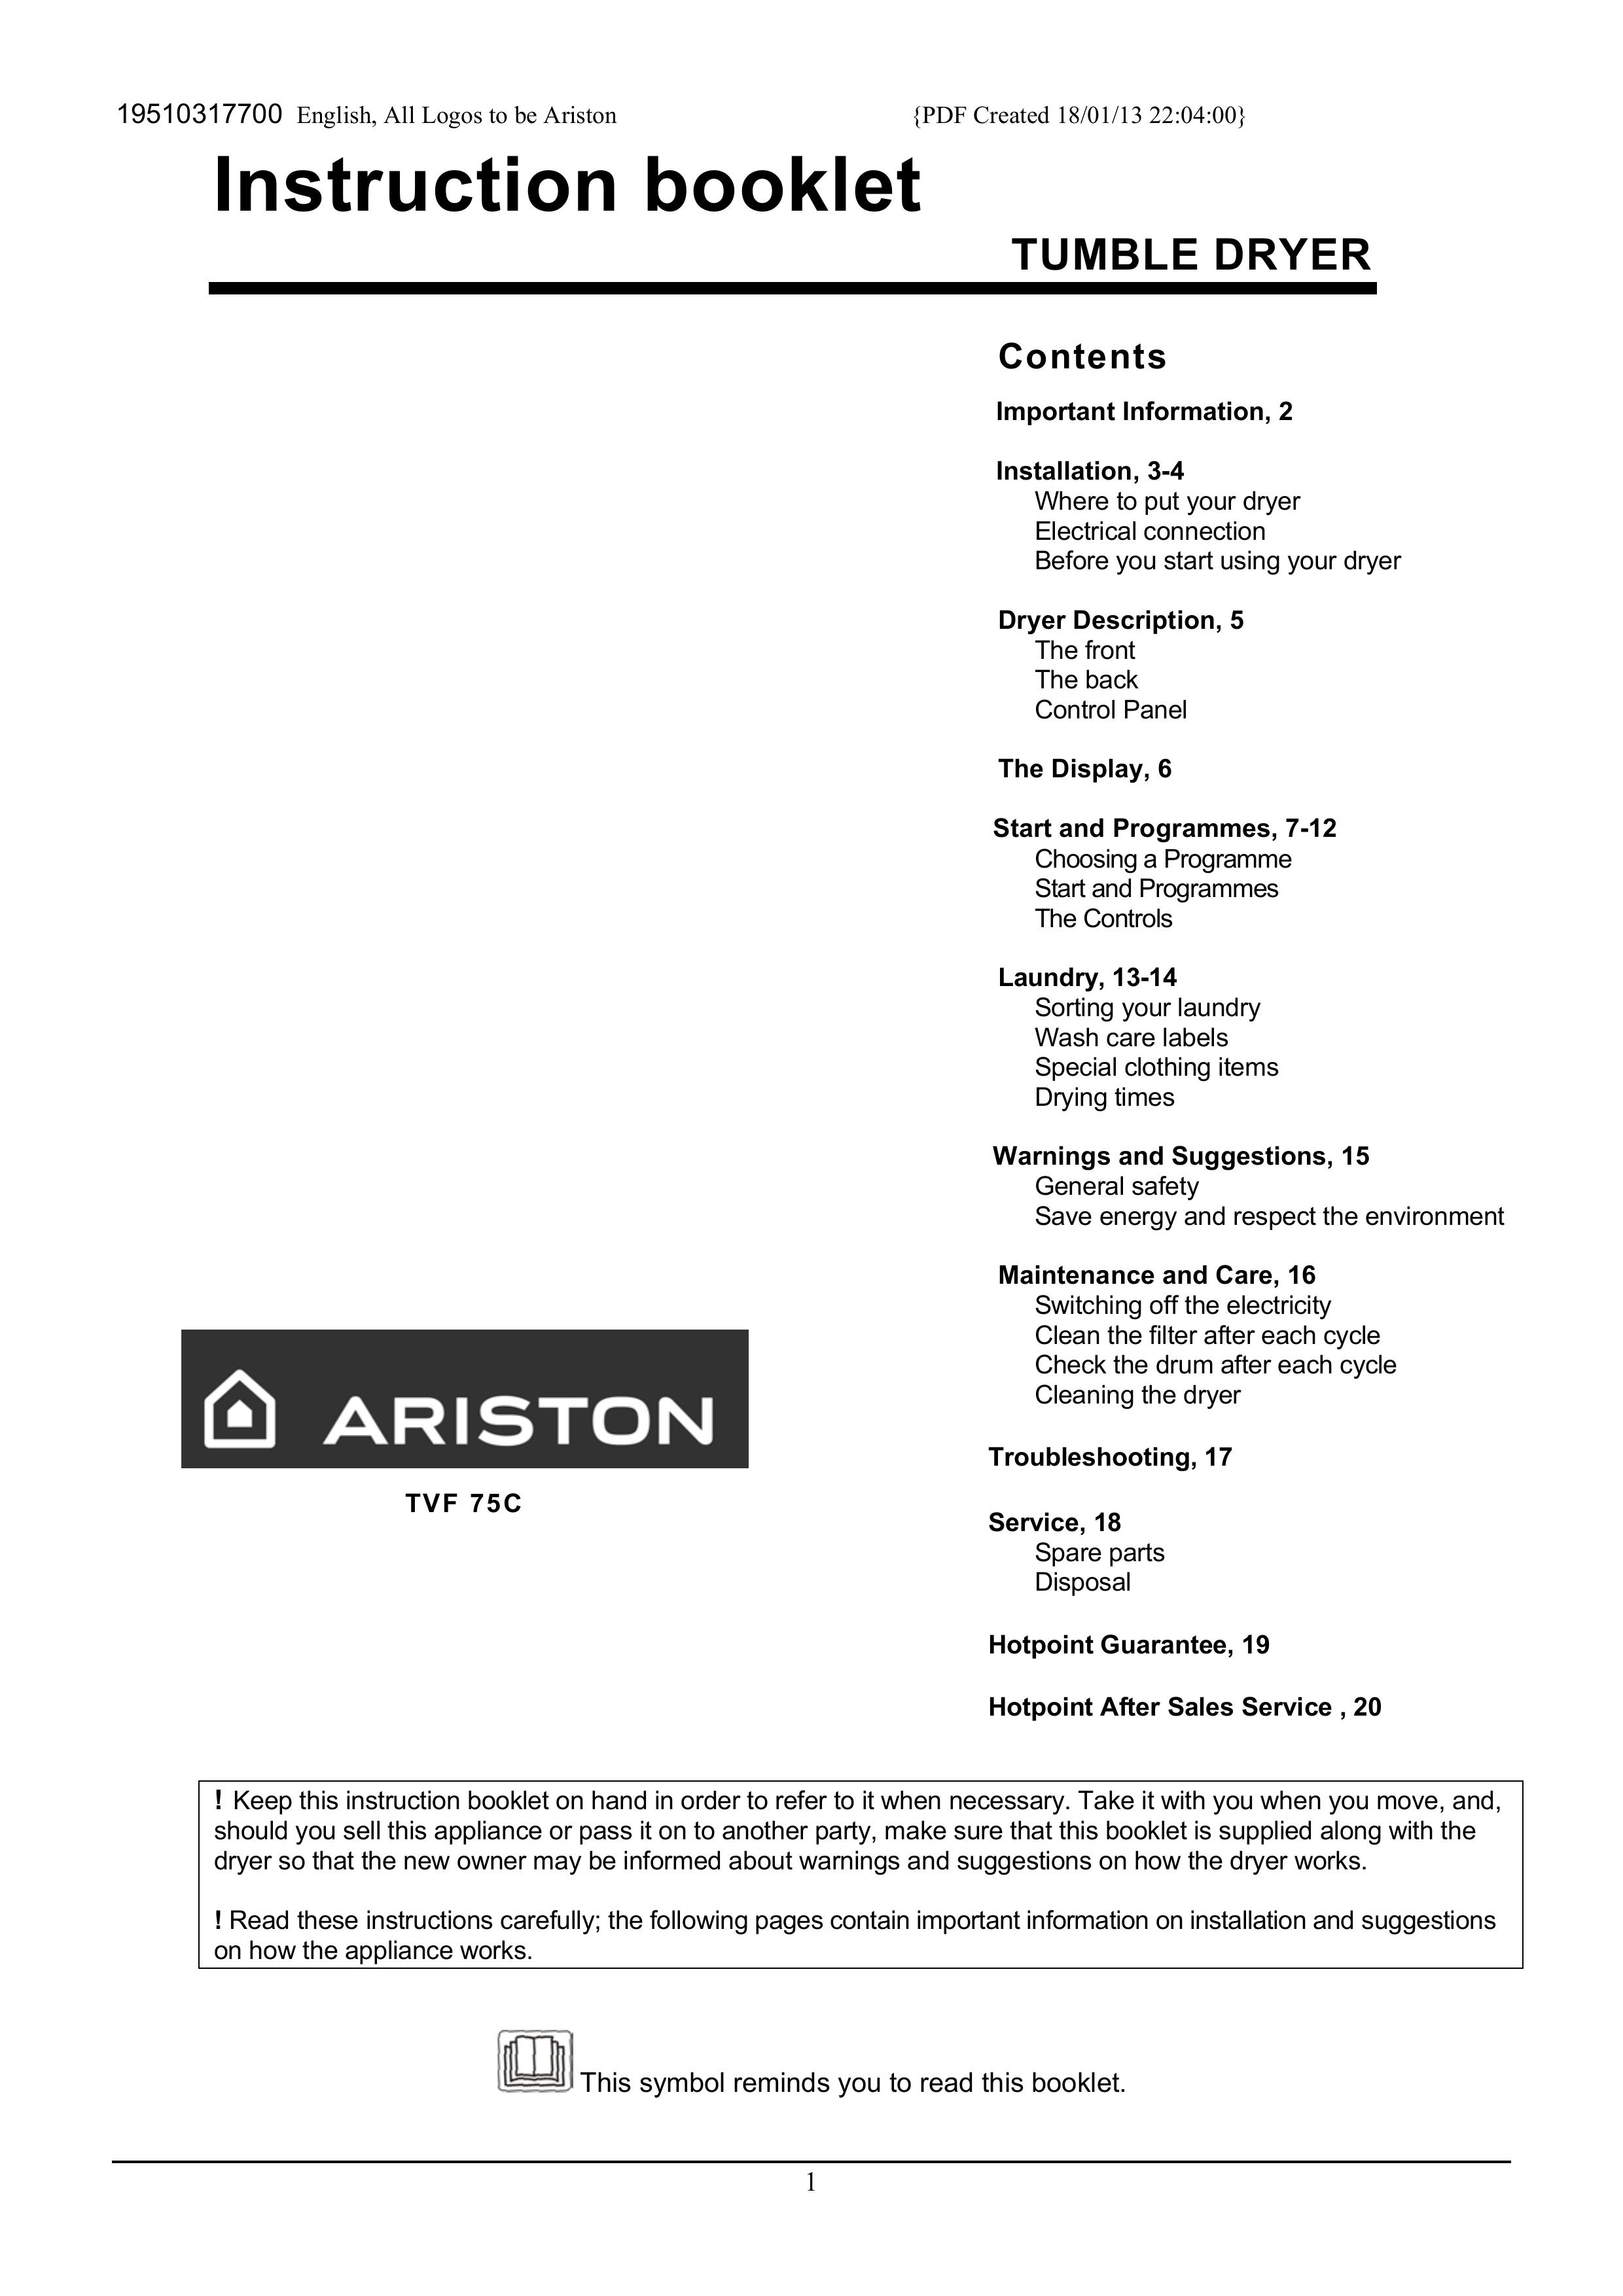 Ariston TVF 75C Hair Dryer User Manual